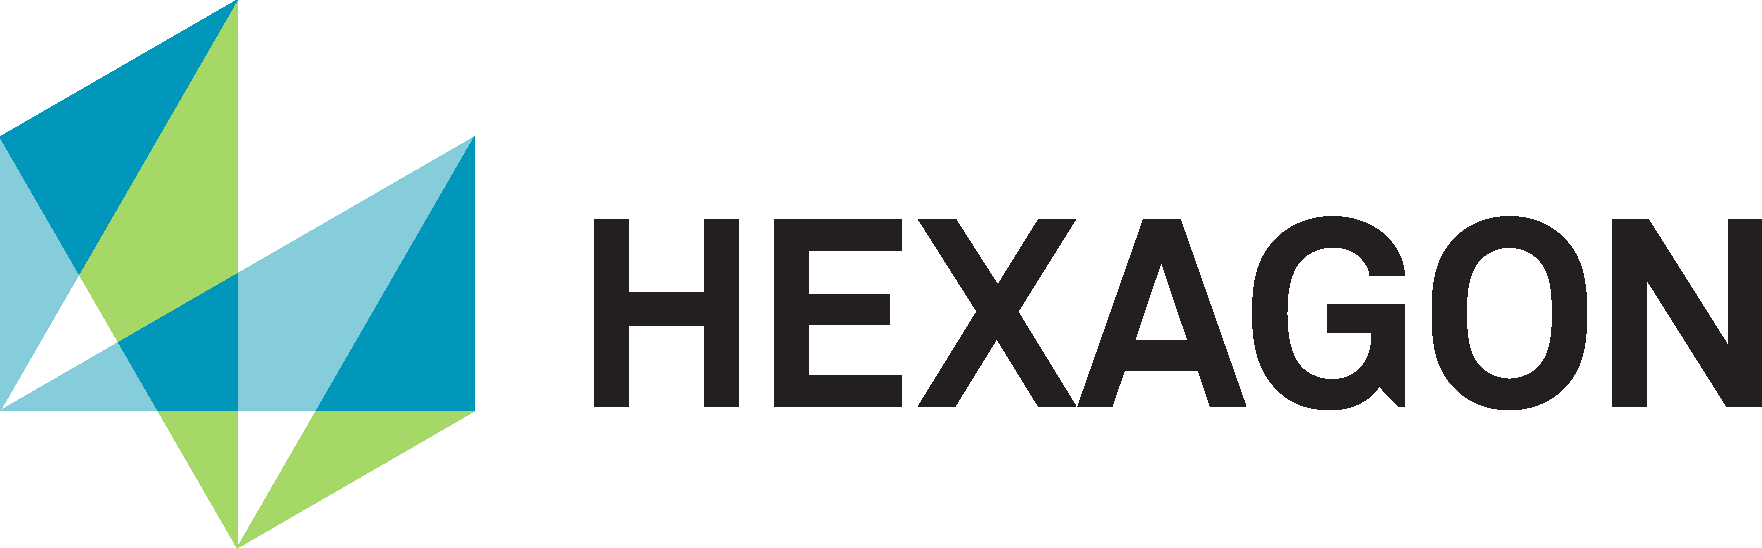 Hexagon Logo png